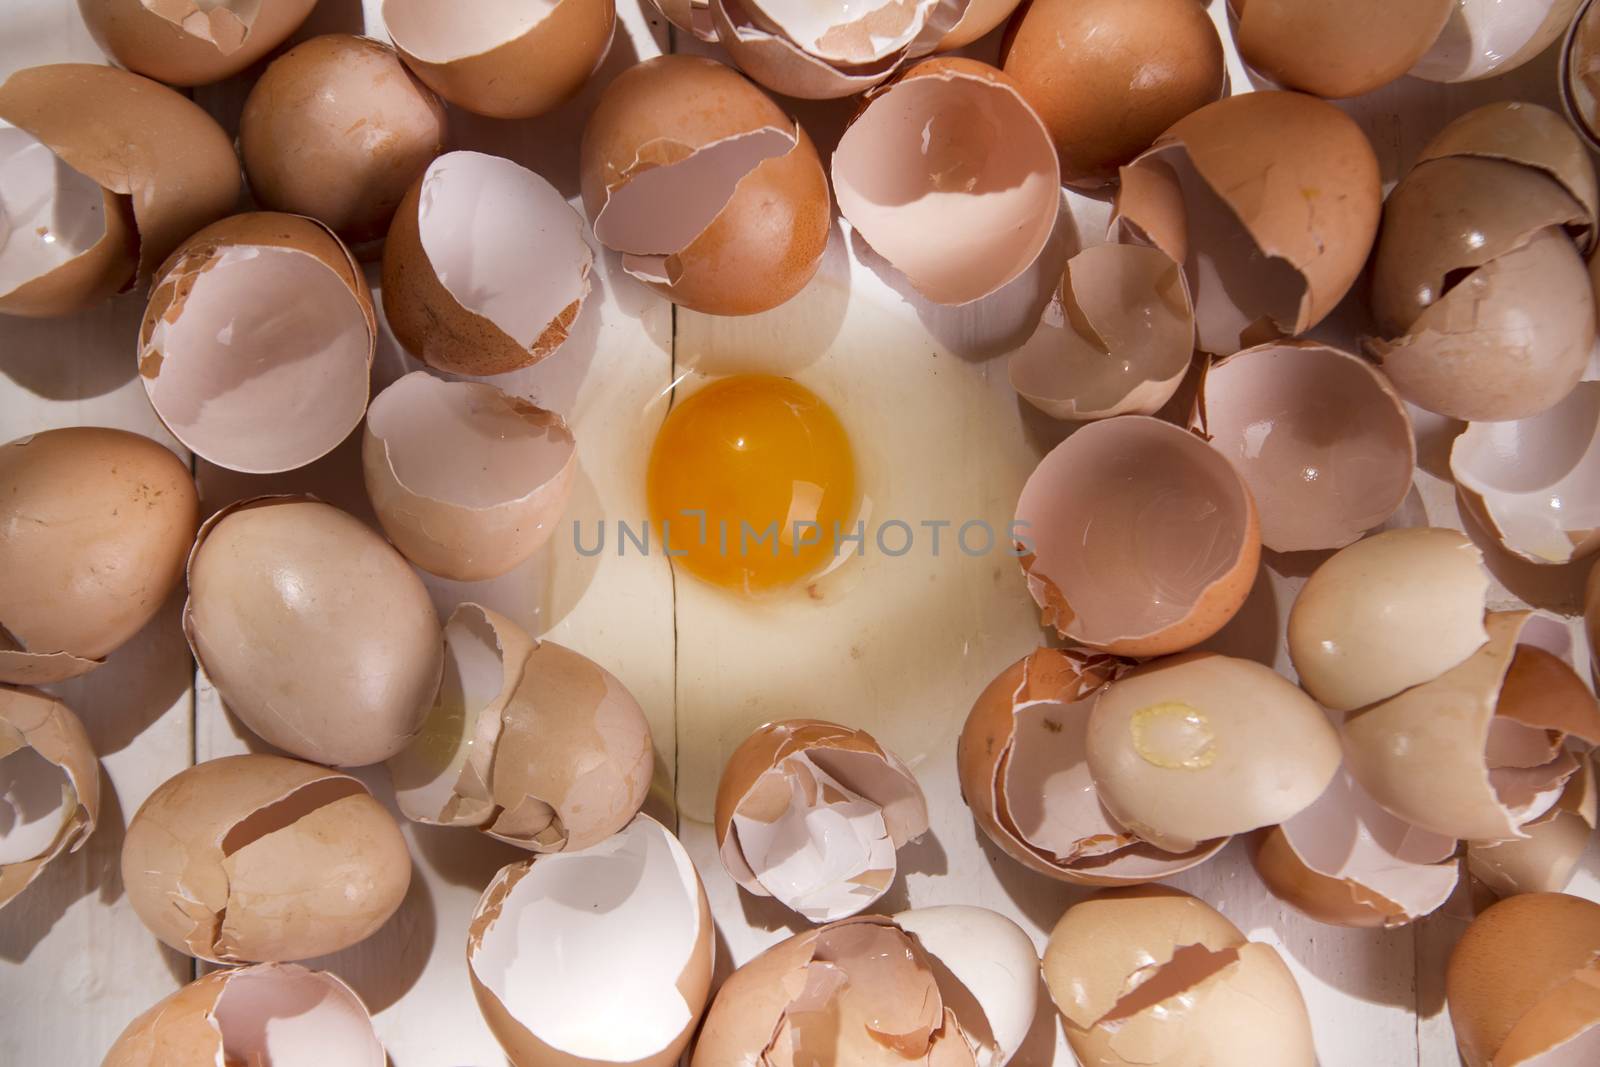 Broken eggshells by fotografiche.eu